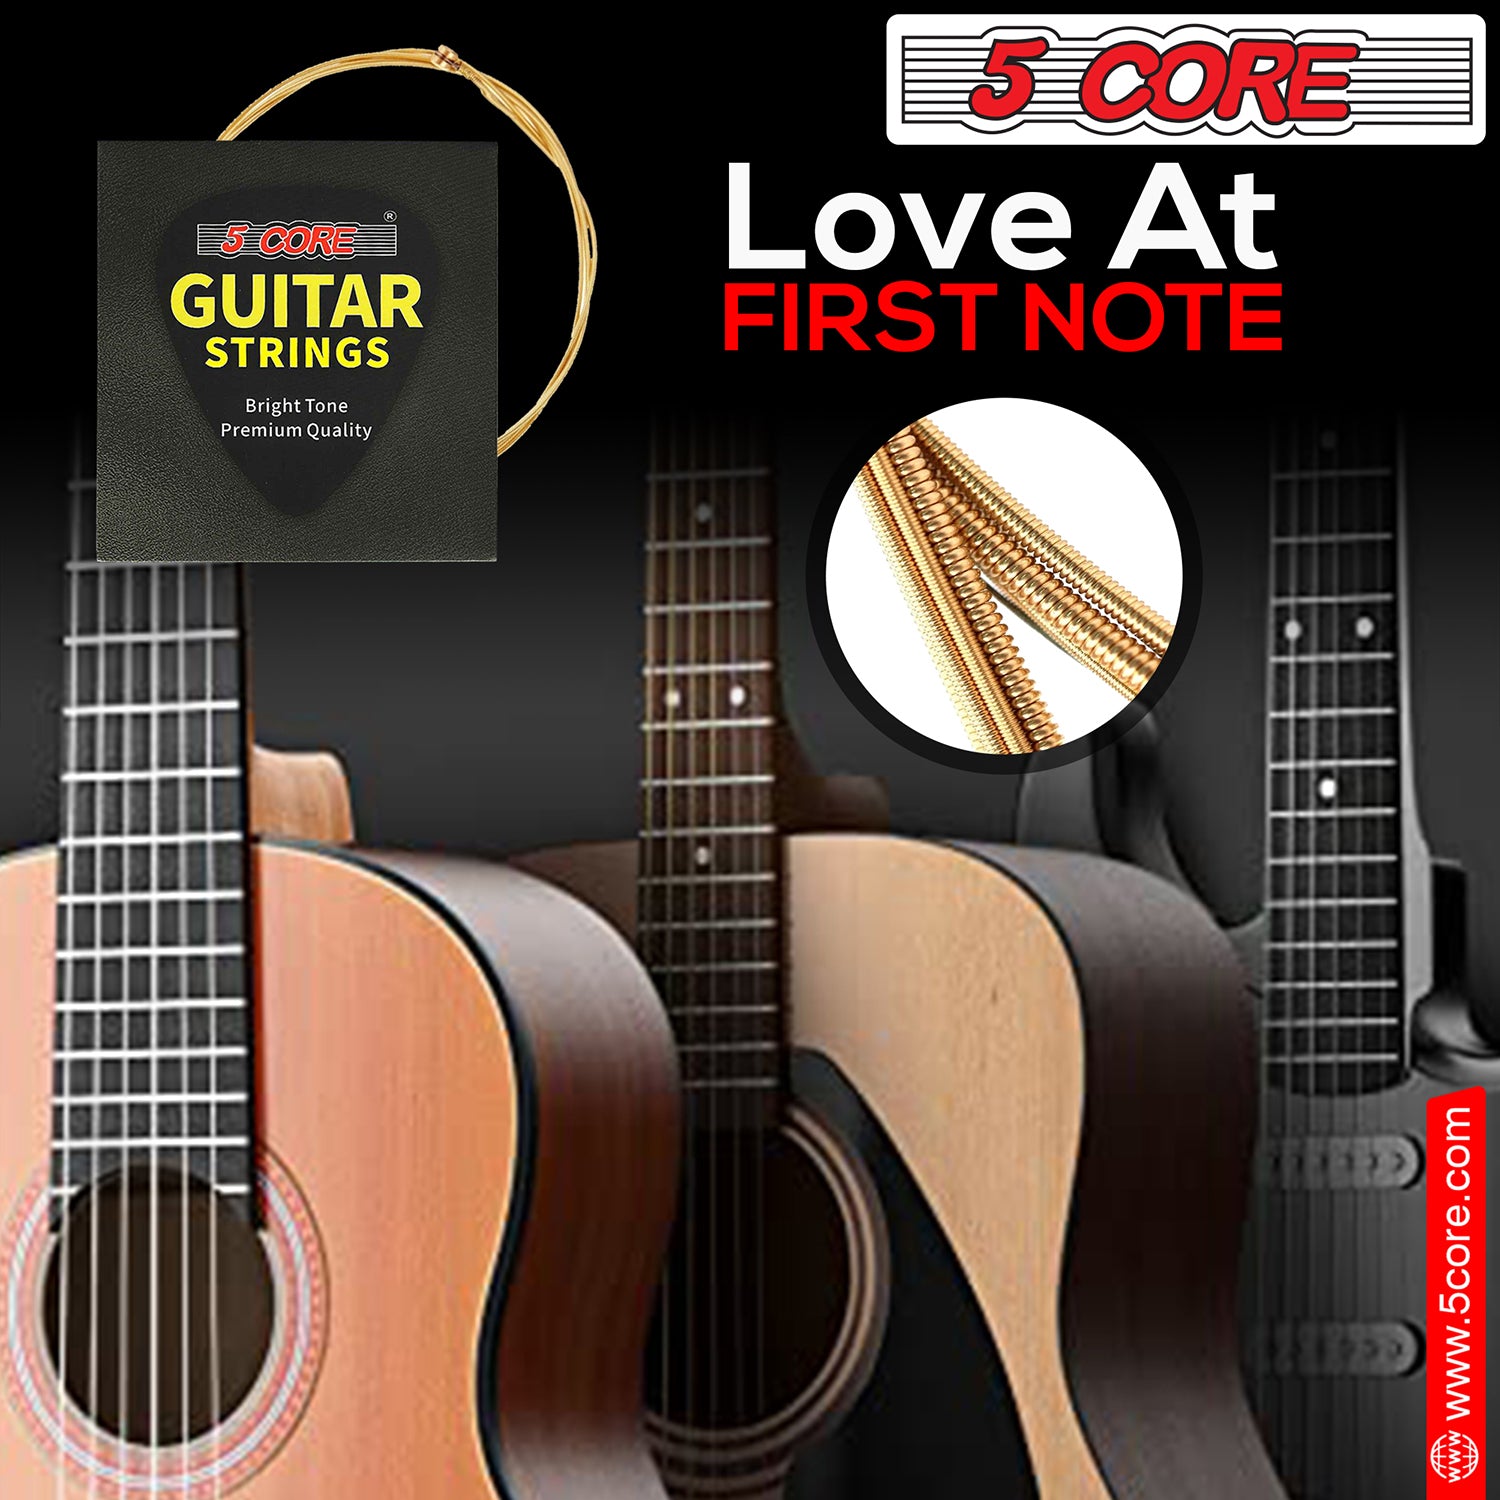 5Core Acoustic Guitar Strings 0.010-0.047 Steel Gauge Heavy Duty w Bright Tone For 6 String Guitars